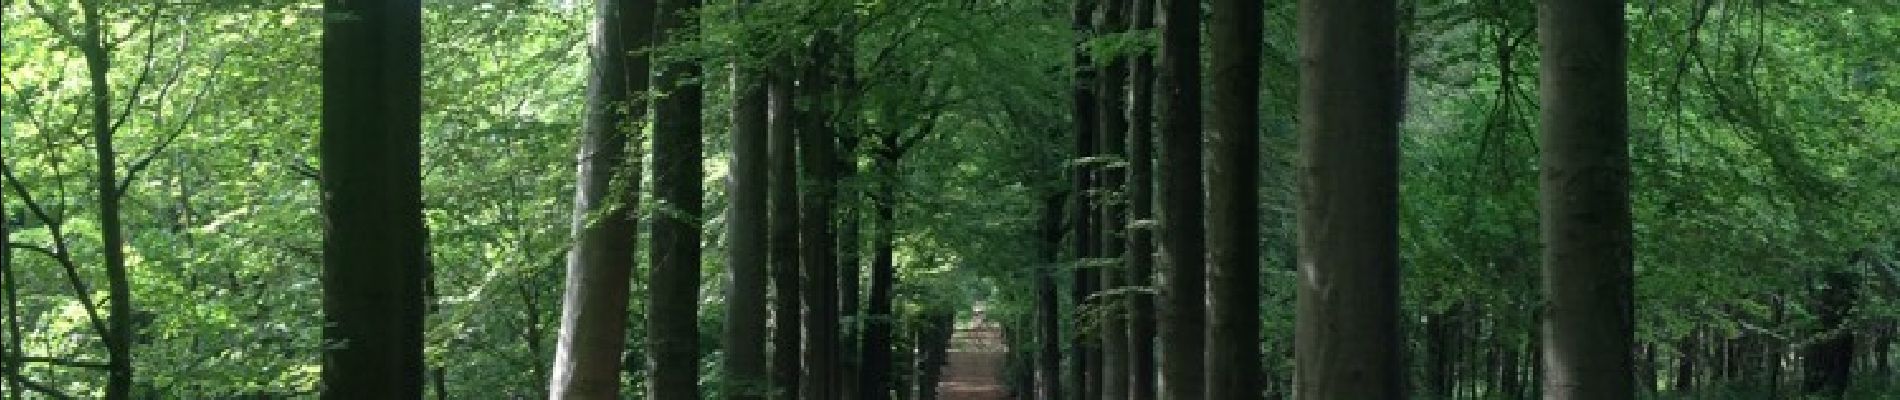 Trail Walking Ypres - Zillebeke - Photo